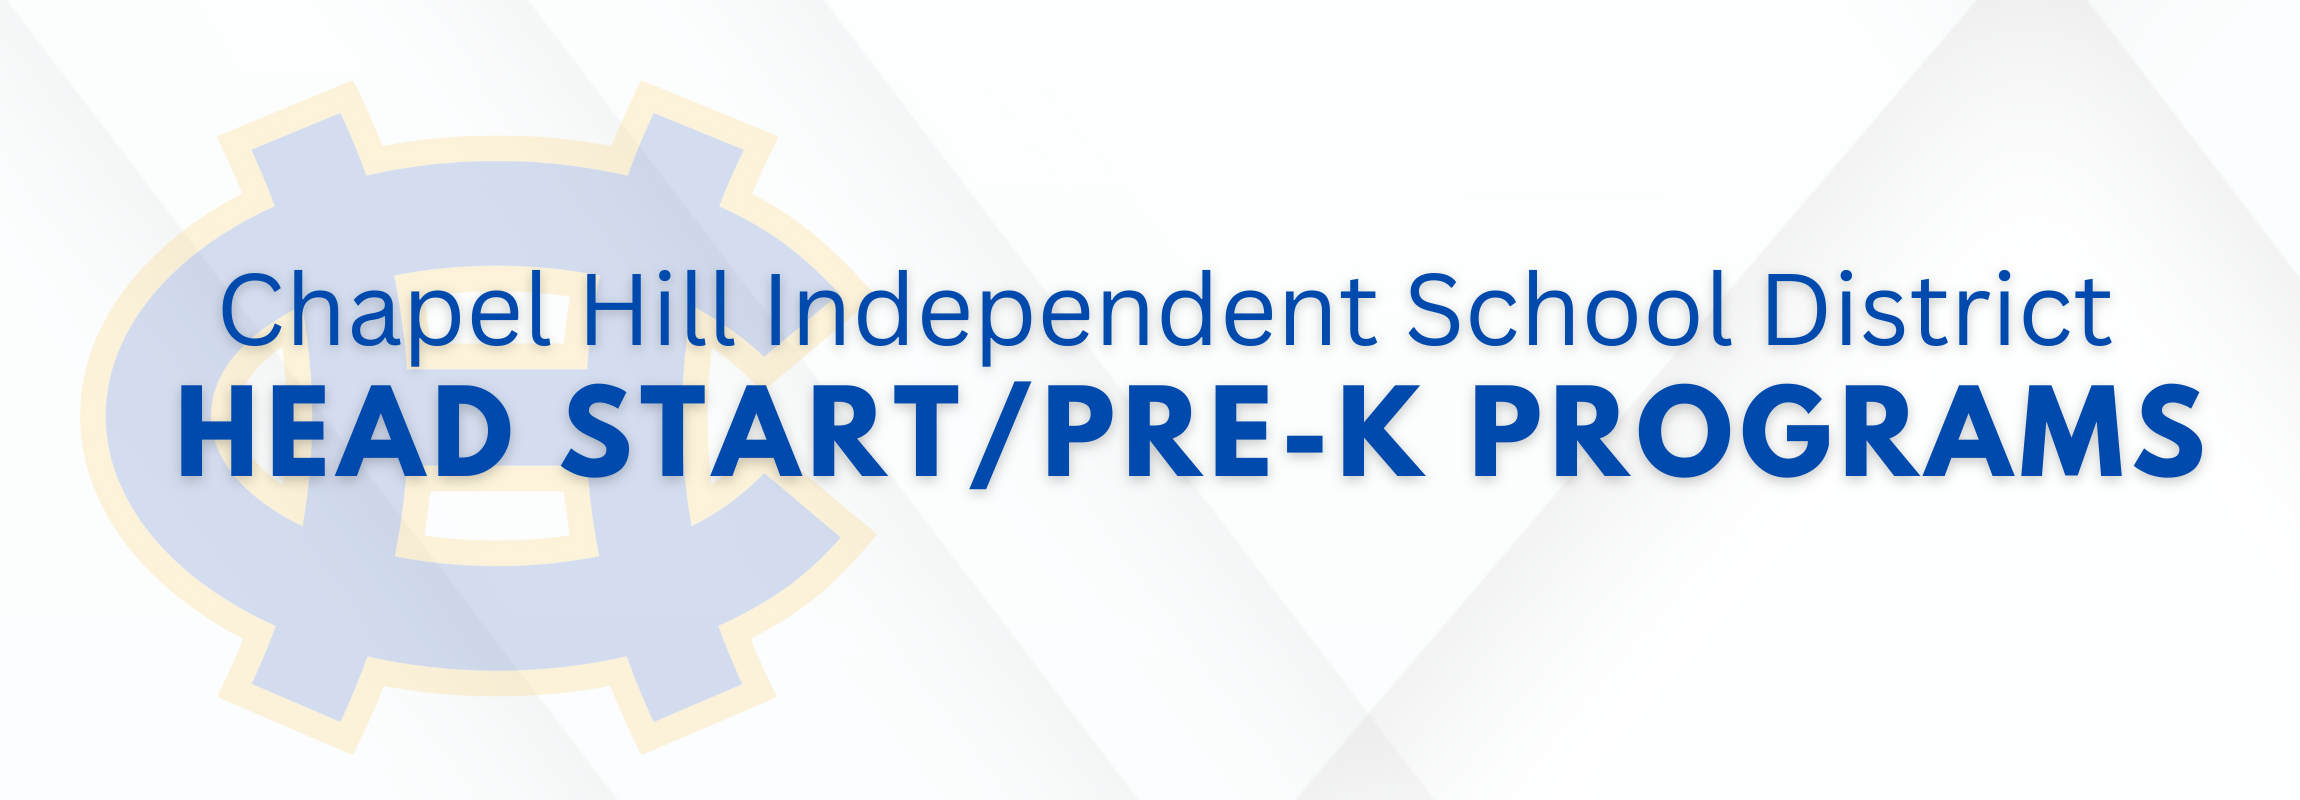 Head Start/ Pre-K Programs